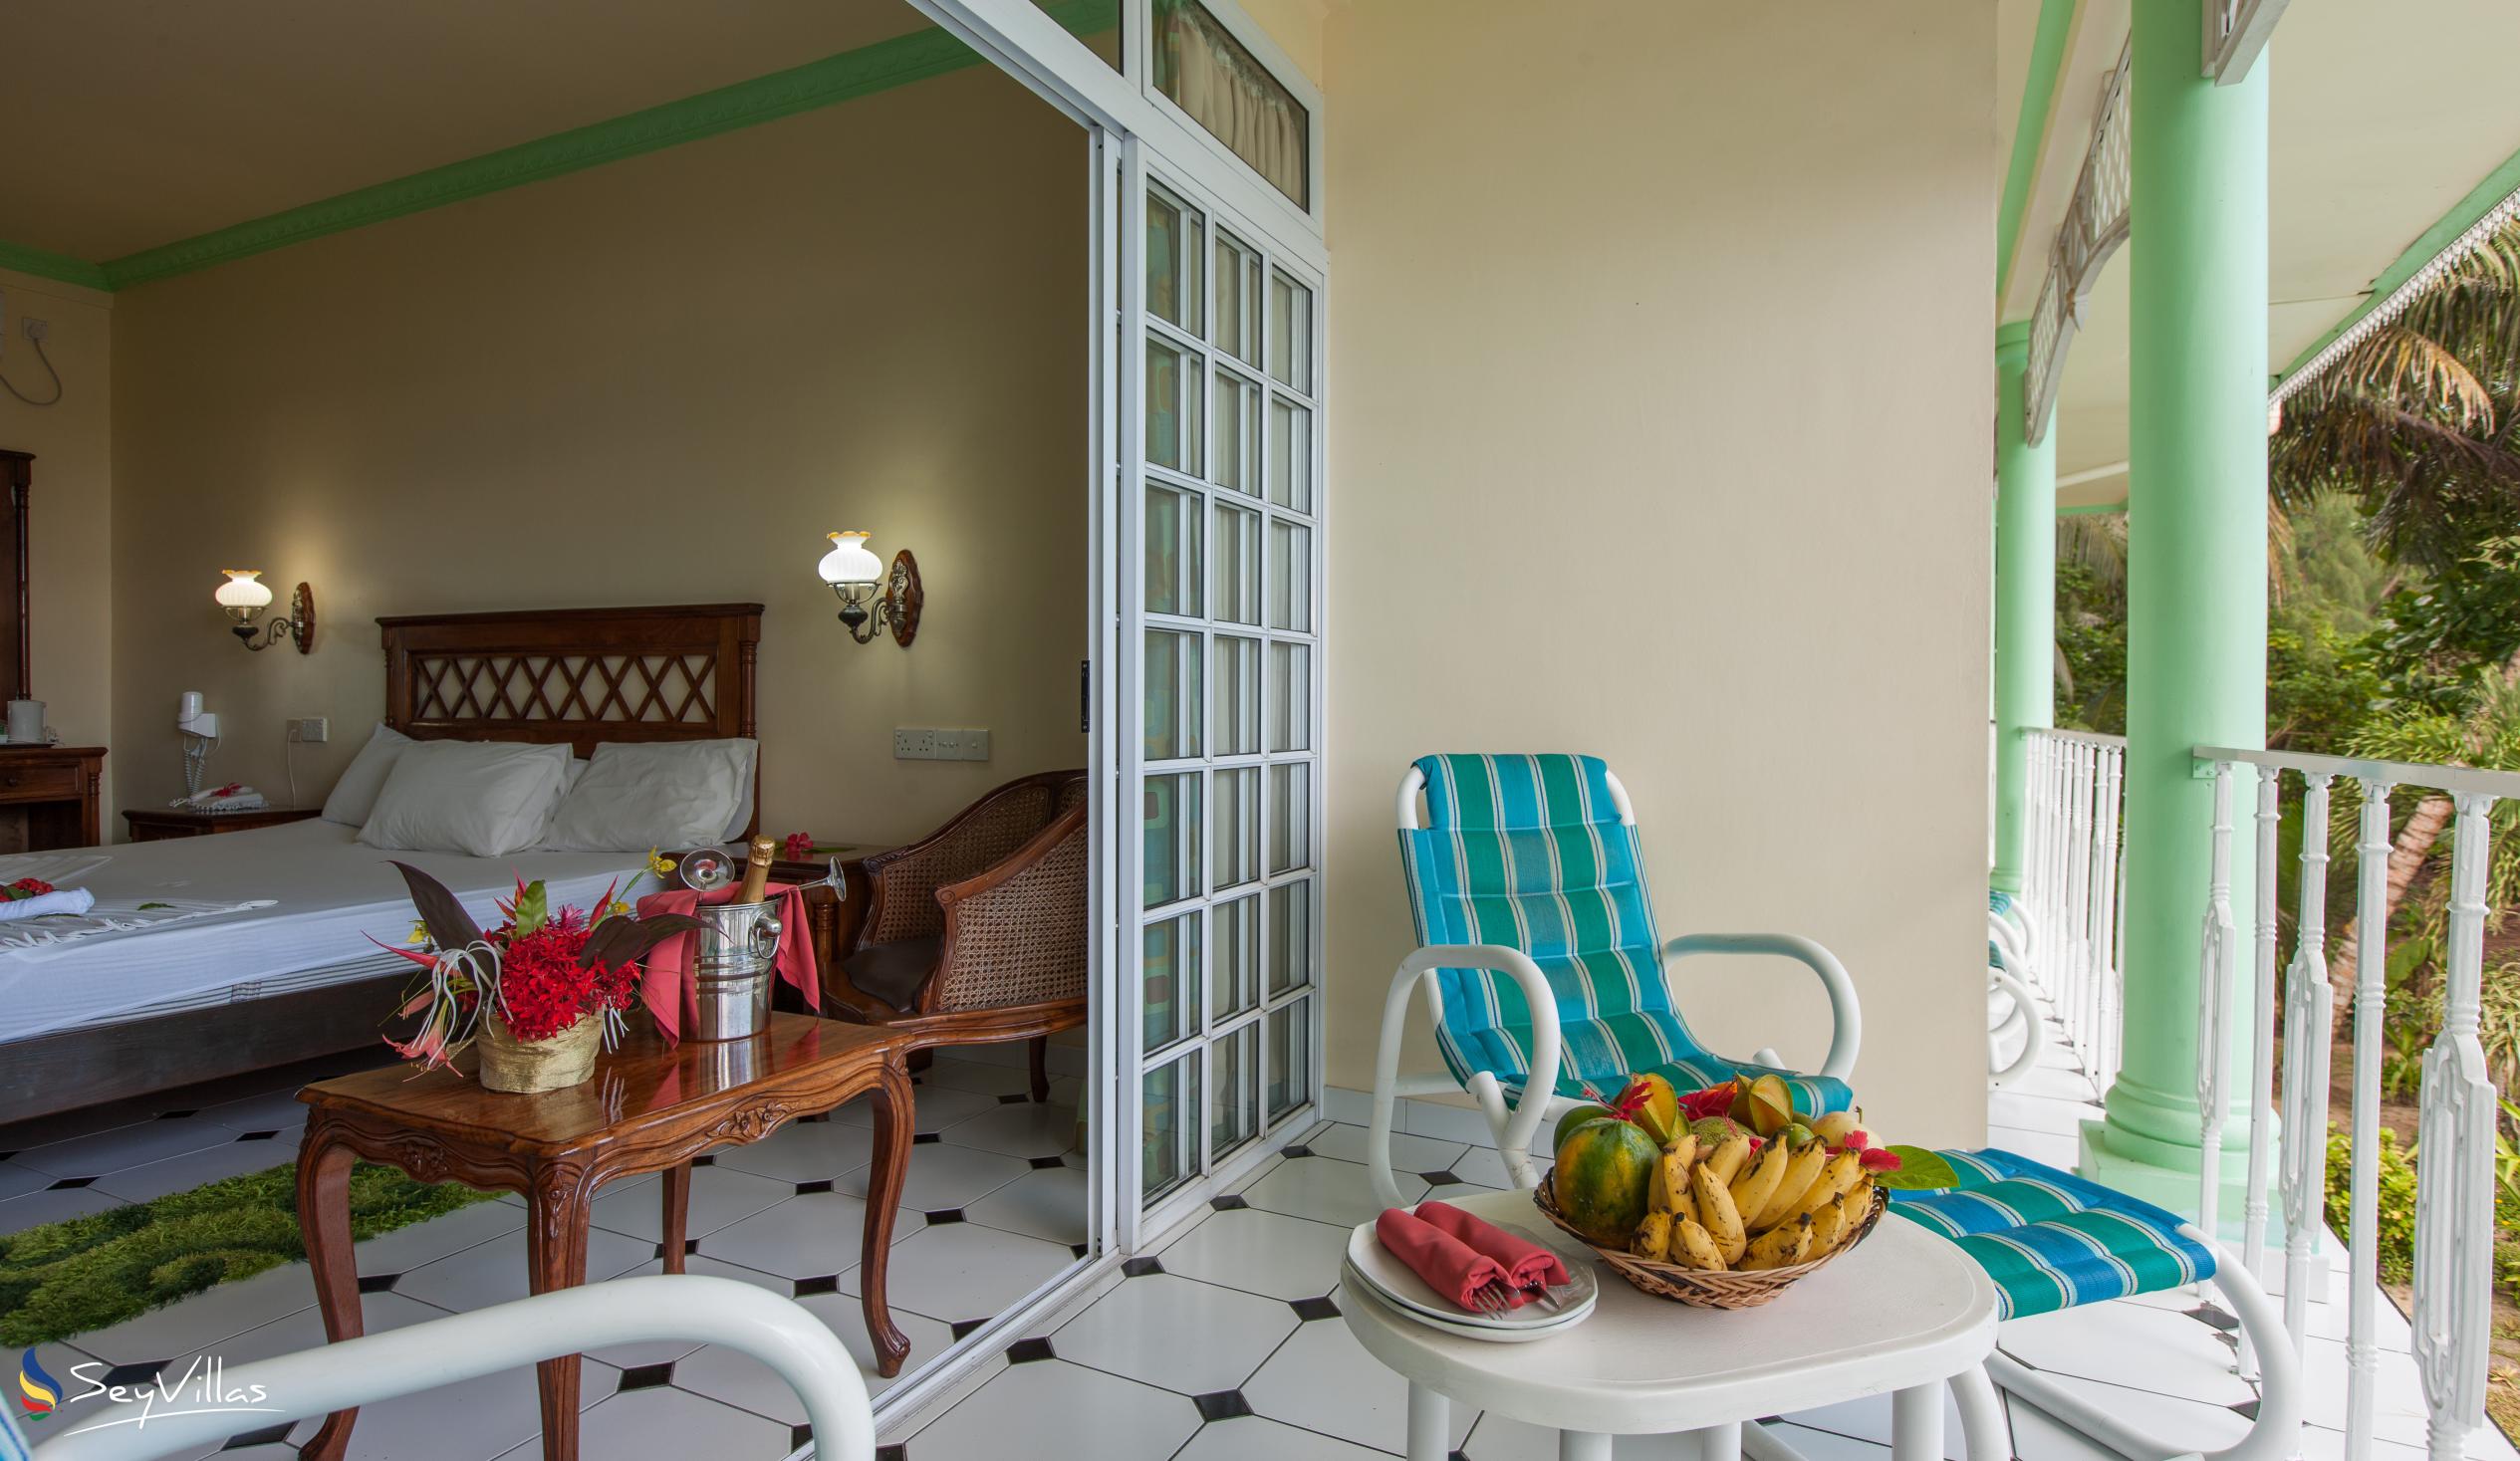 Foto 35: Palm Beach Hotel - Chambre Familiale - Praslin (Seychelles)